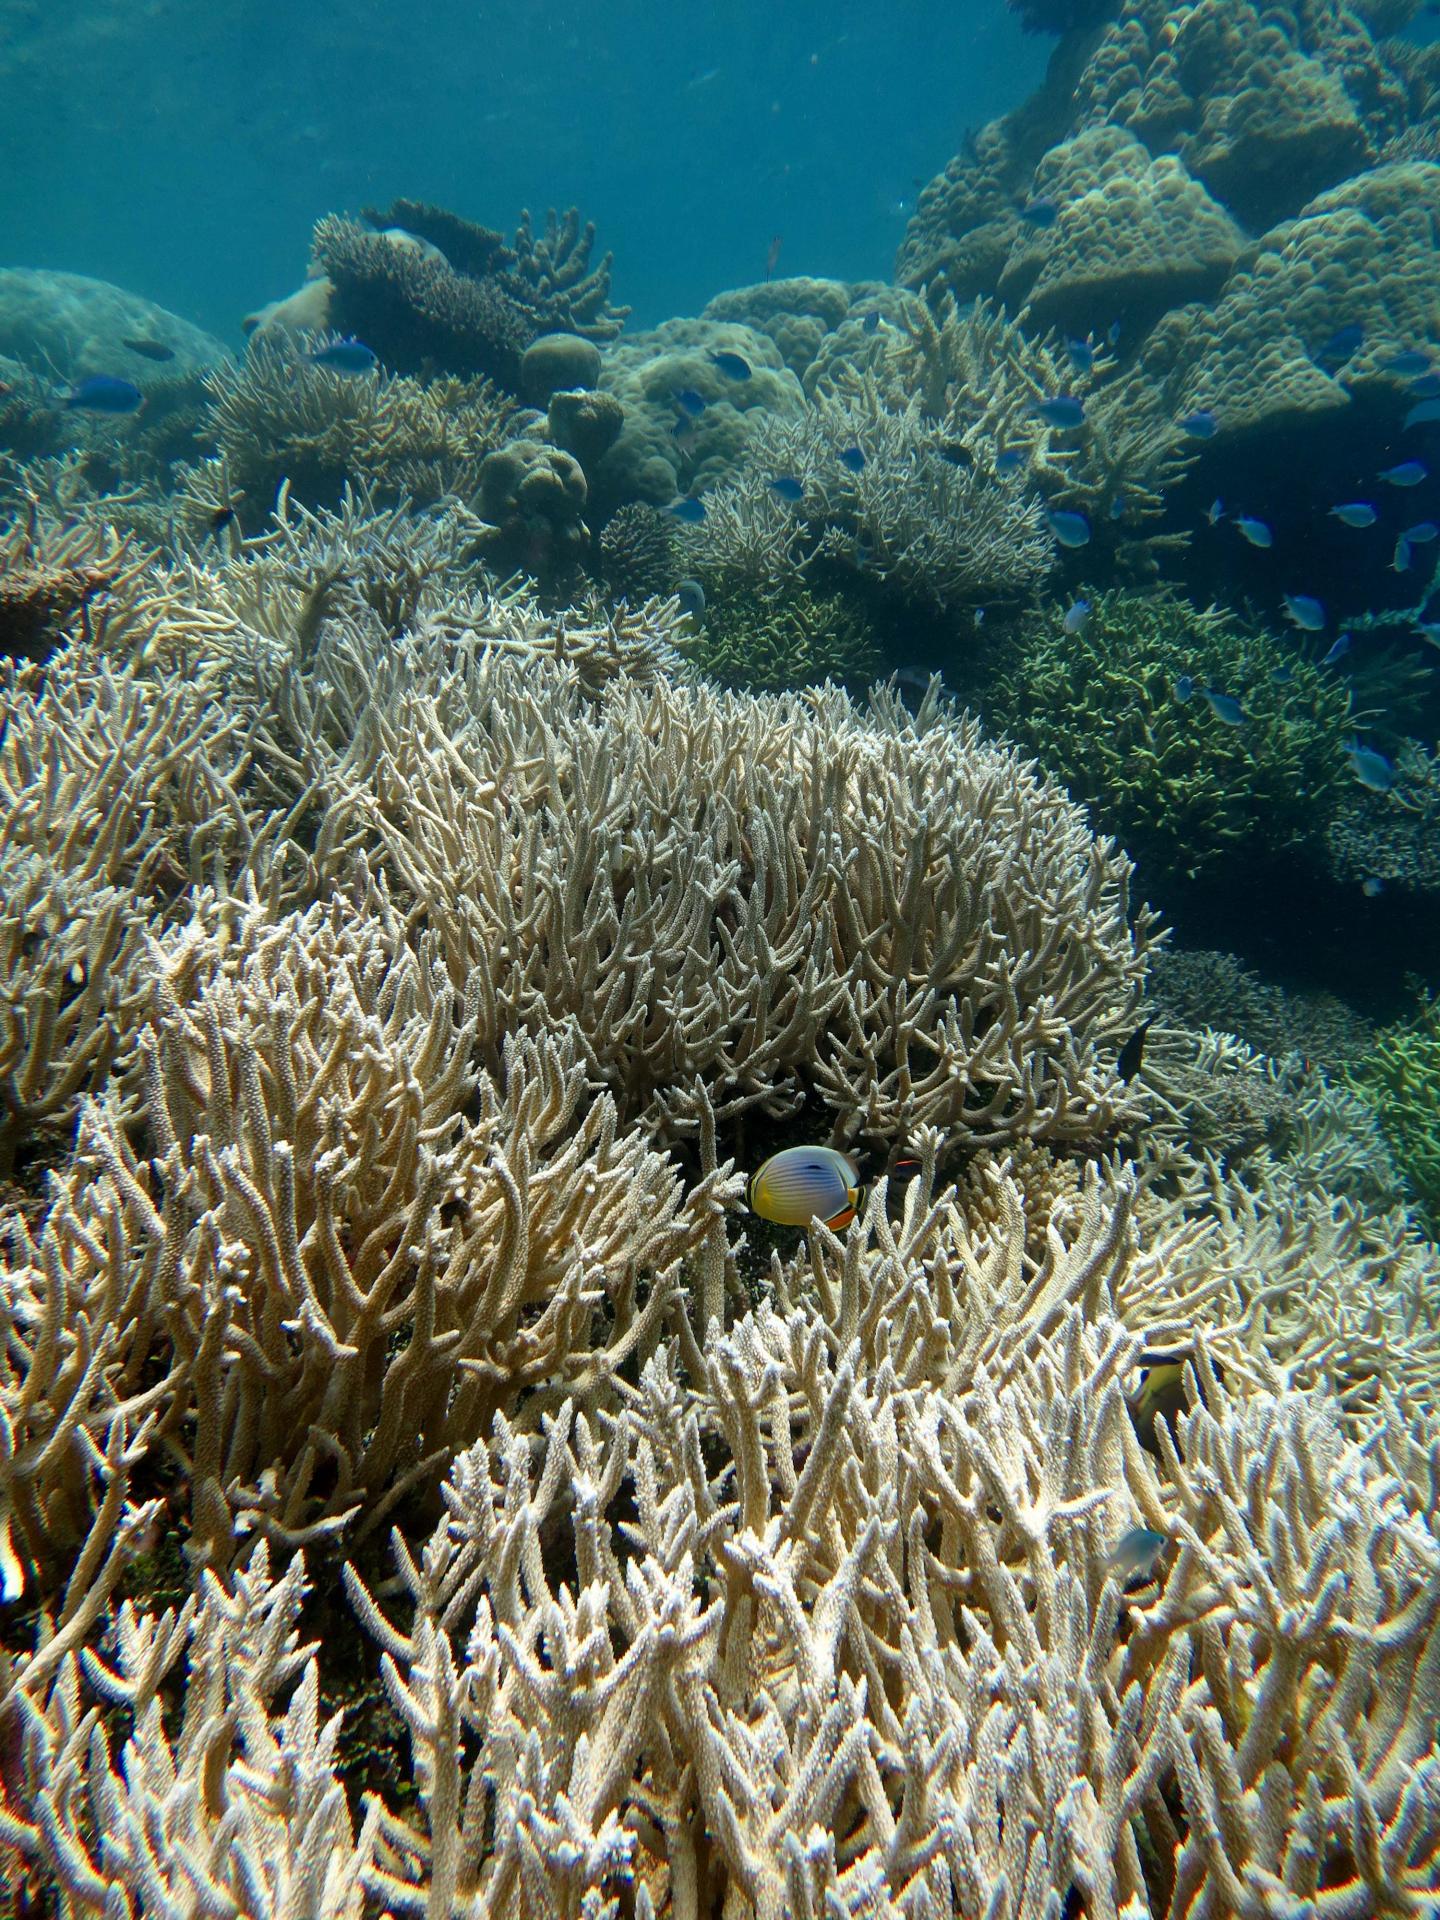 Coral Reefs Are a Natural Coastal Defense